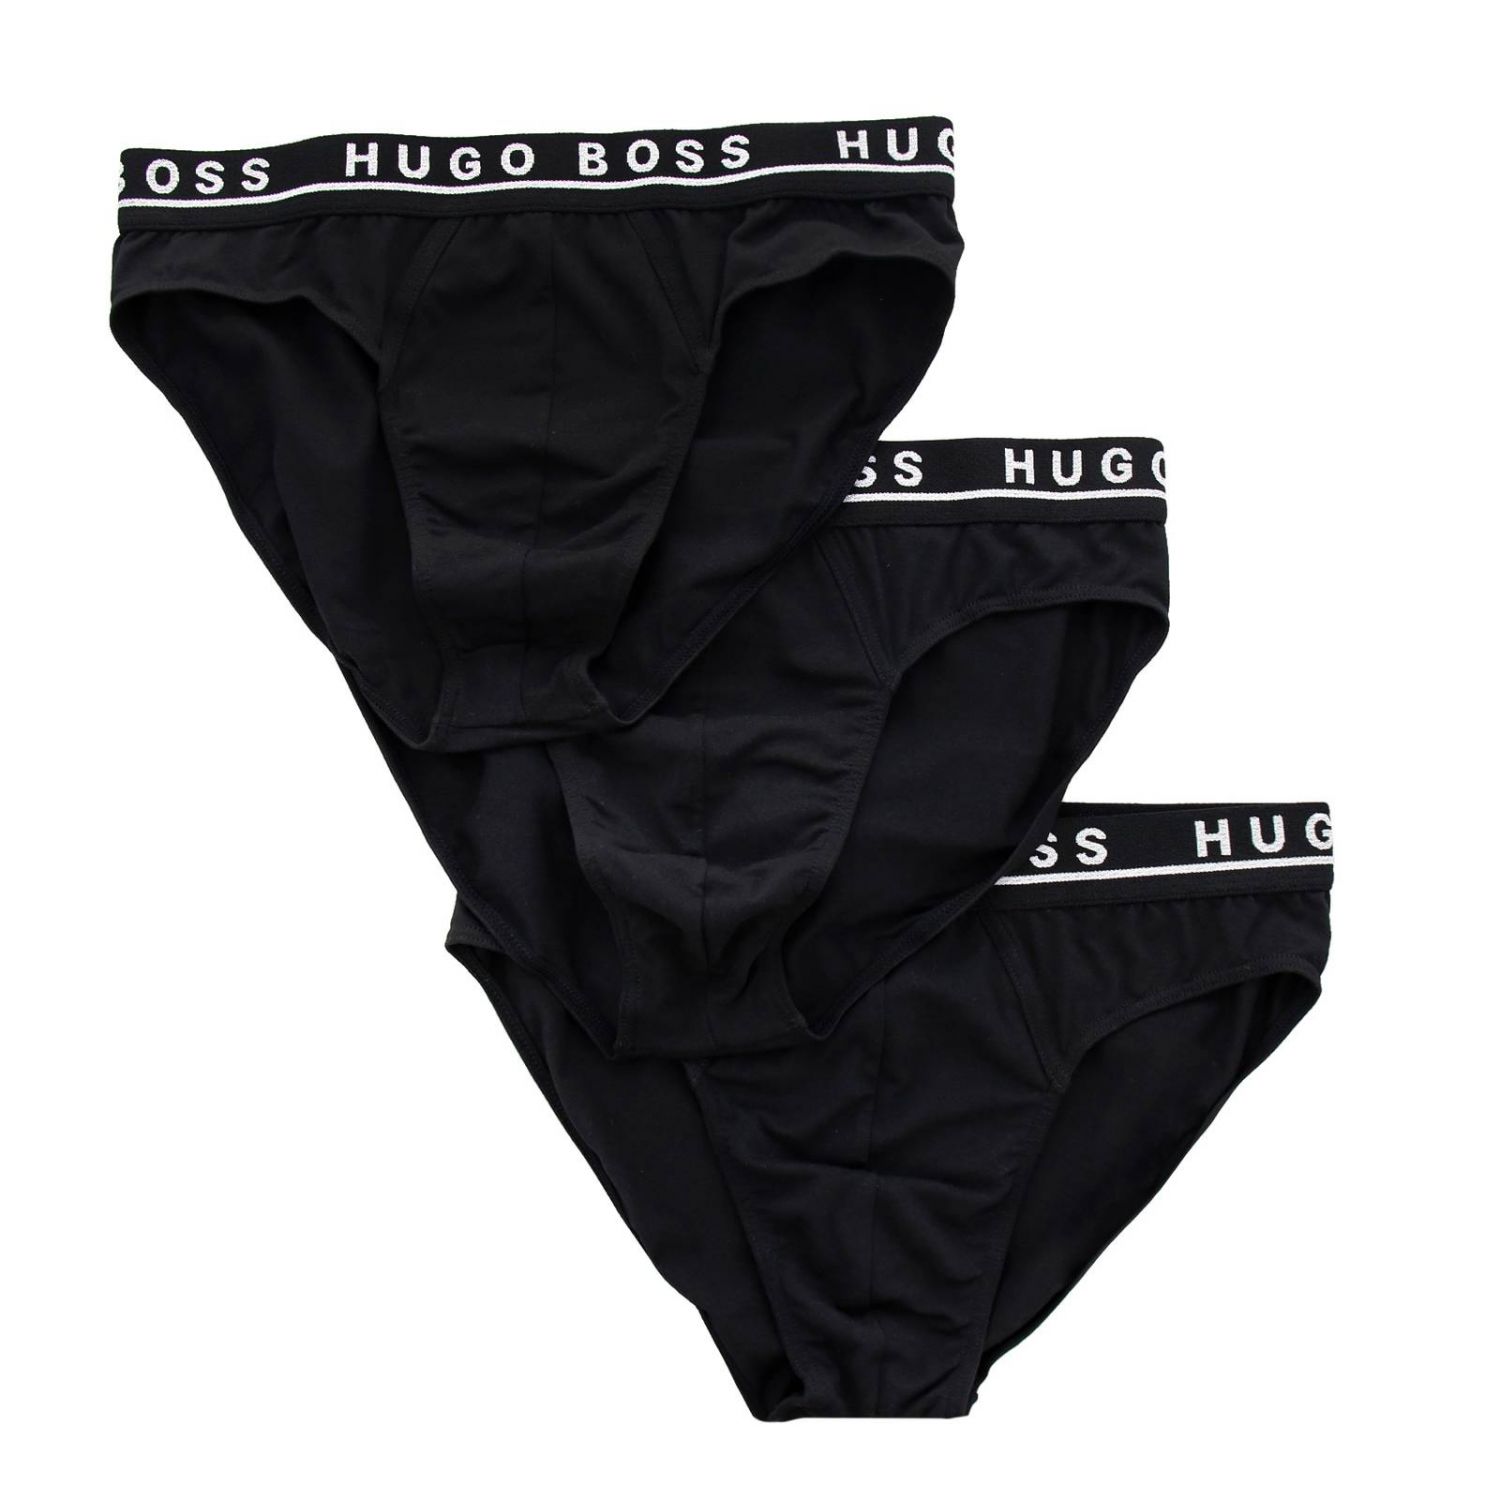 Underwear men Hugo Boss | Underwear Hugo Boss Men Black | Underwear ...